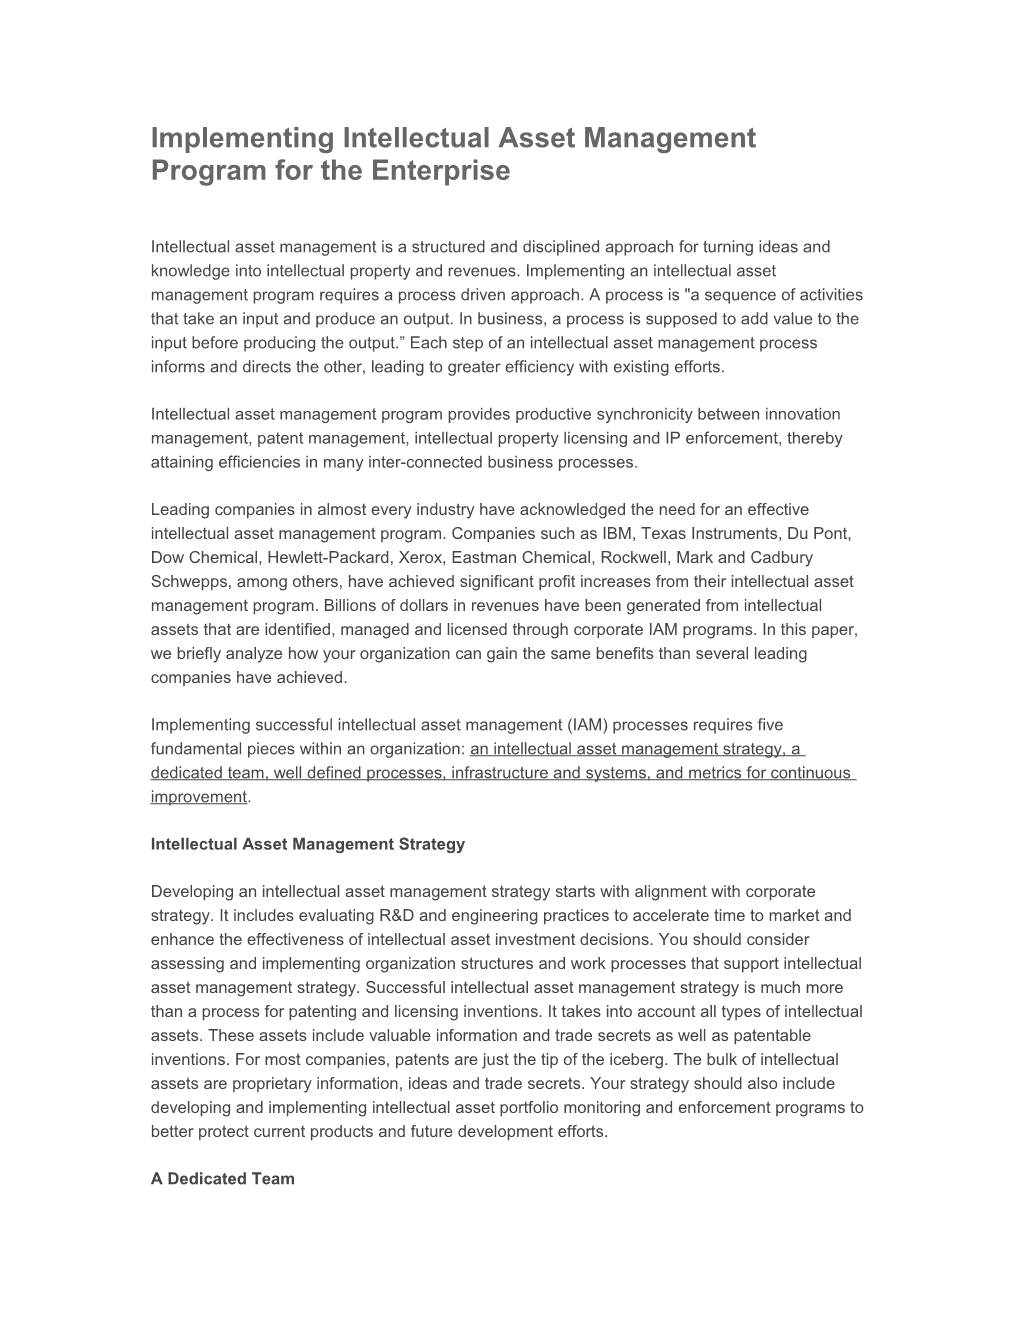 Implementing Intellectual Asset Management Program for the Enterprise